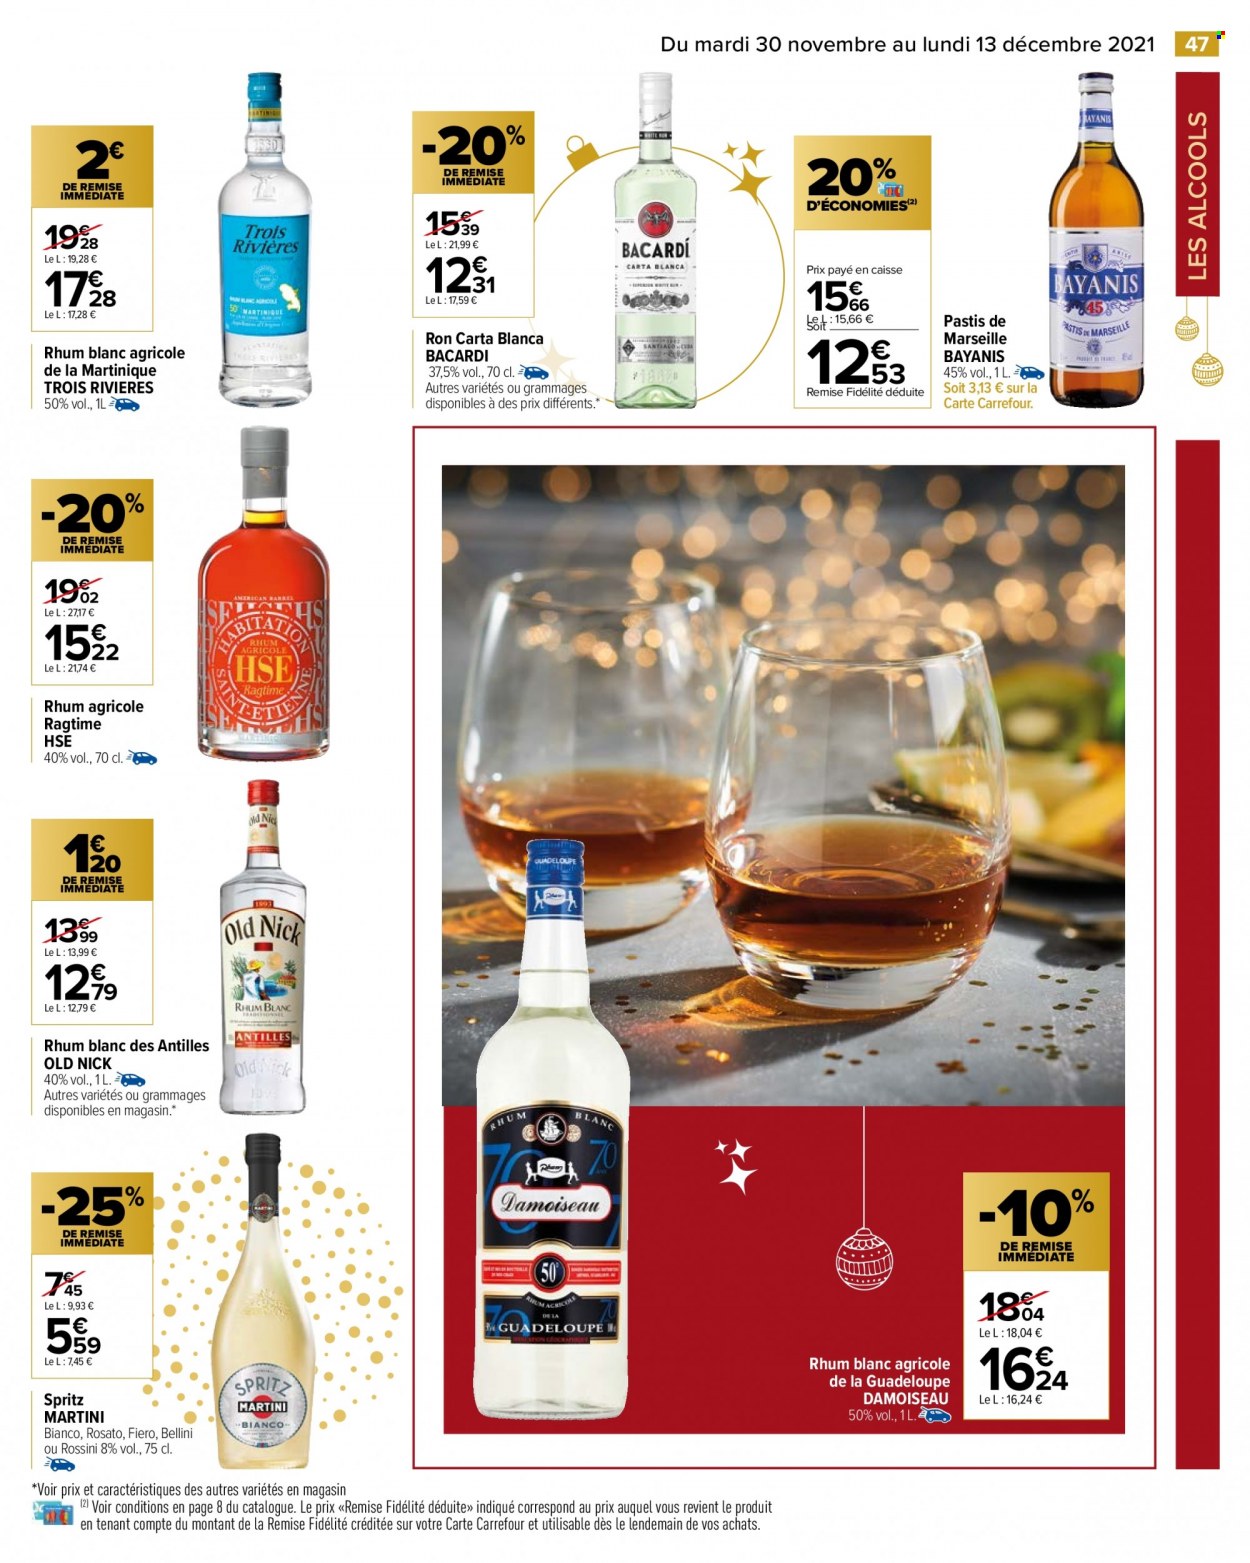 thumbnail - Catalogue Carrefour Hypermarchés - 30/11/2021 - 13/12/2021 - Produits soldés - alcool, Martini, rhum, rhum blanc, pastis, Old Nick, Spritz. Page 55.